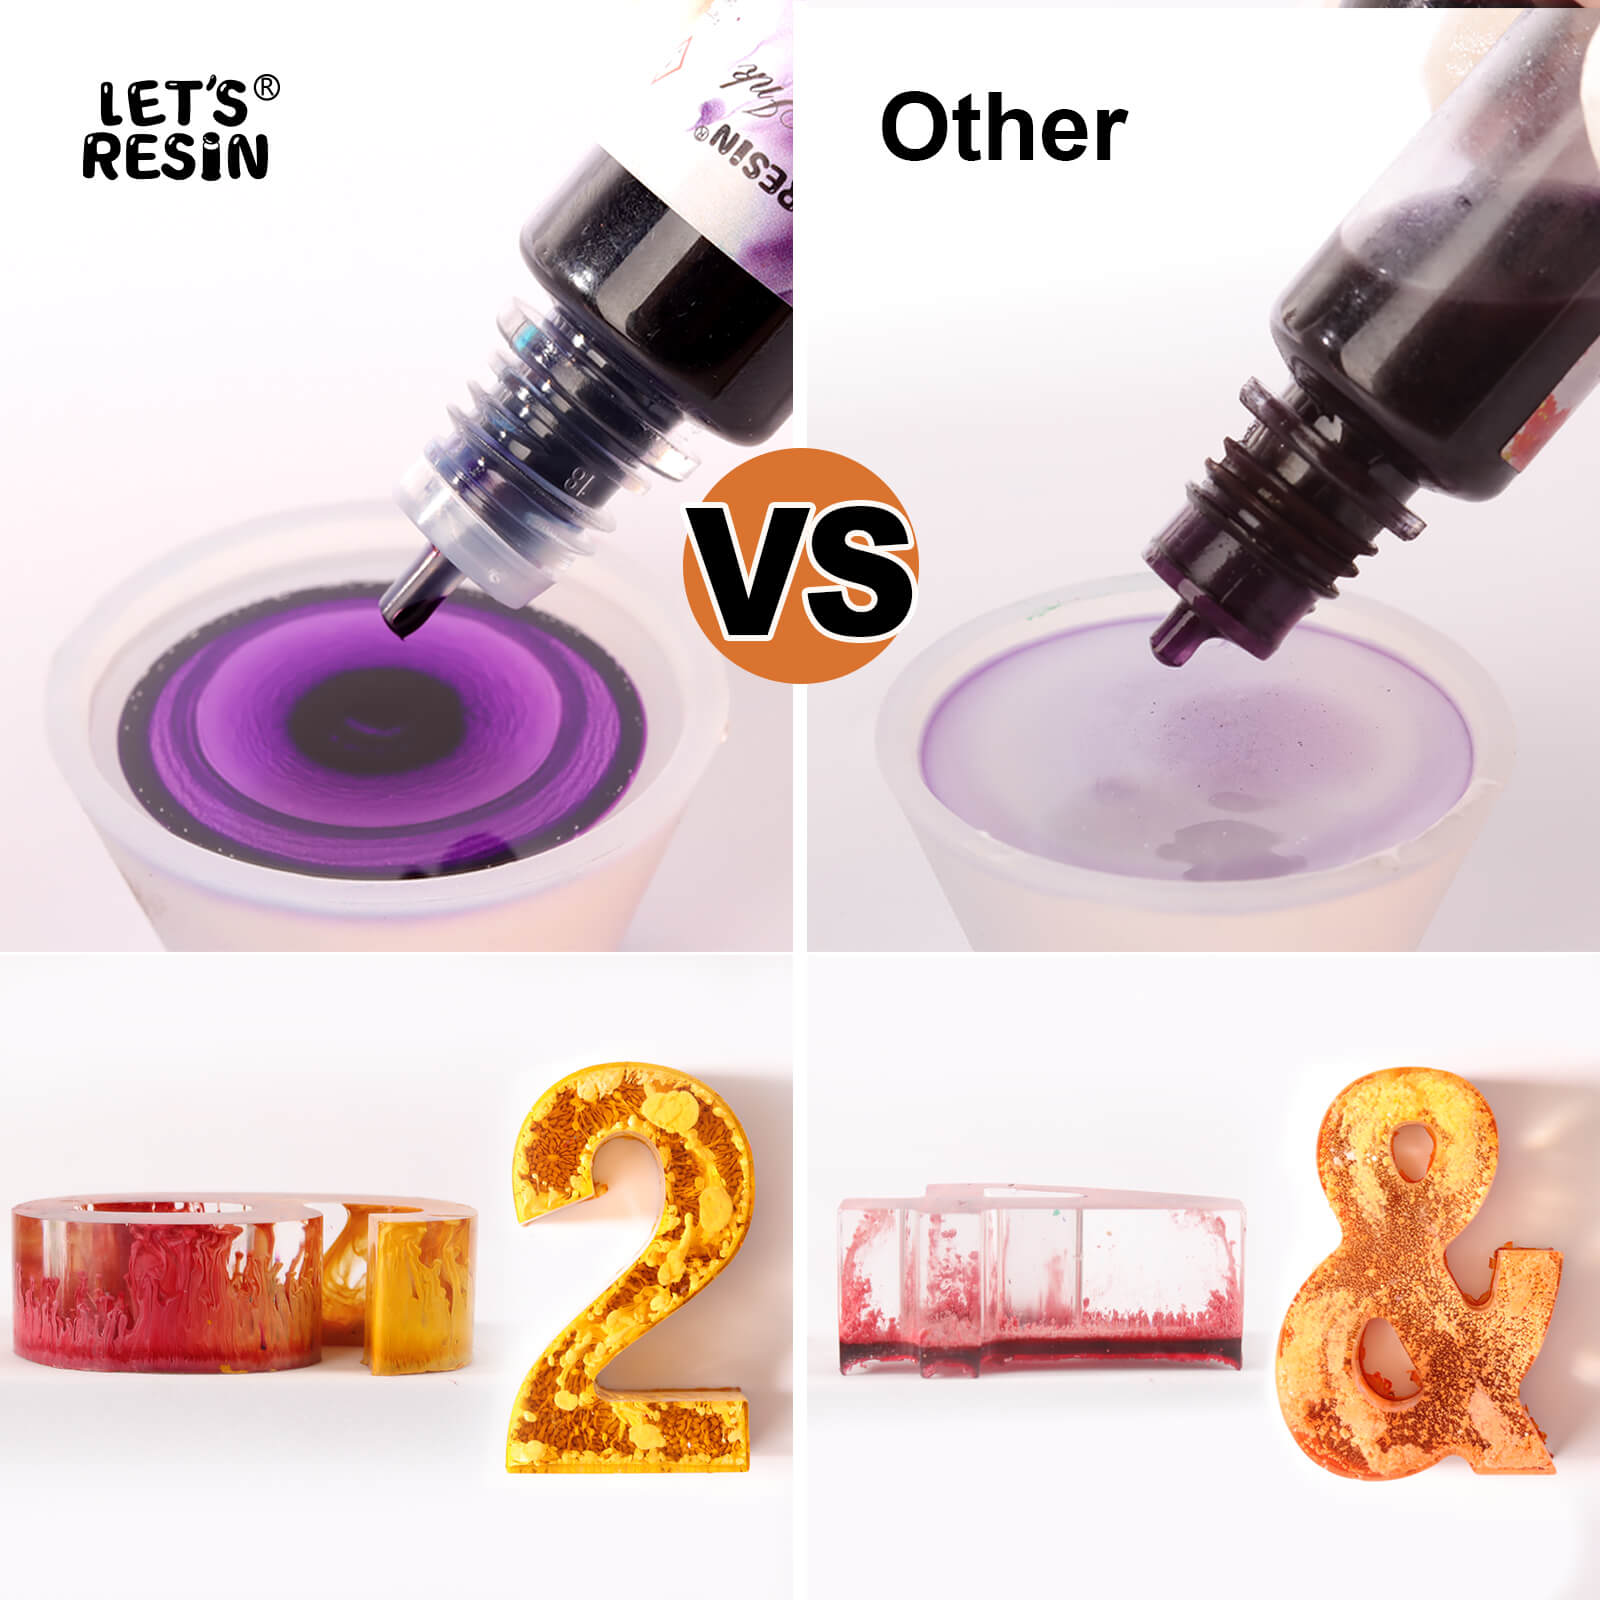 12 Vibrant Colors Metallic Alcohol Ink Set Epoxy Resin Pigment